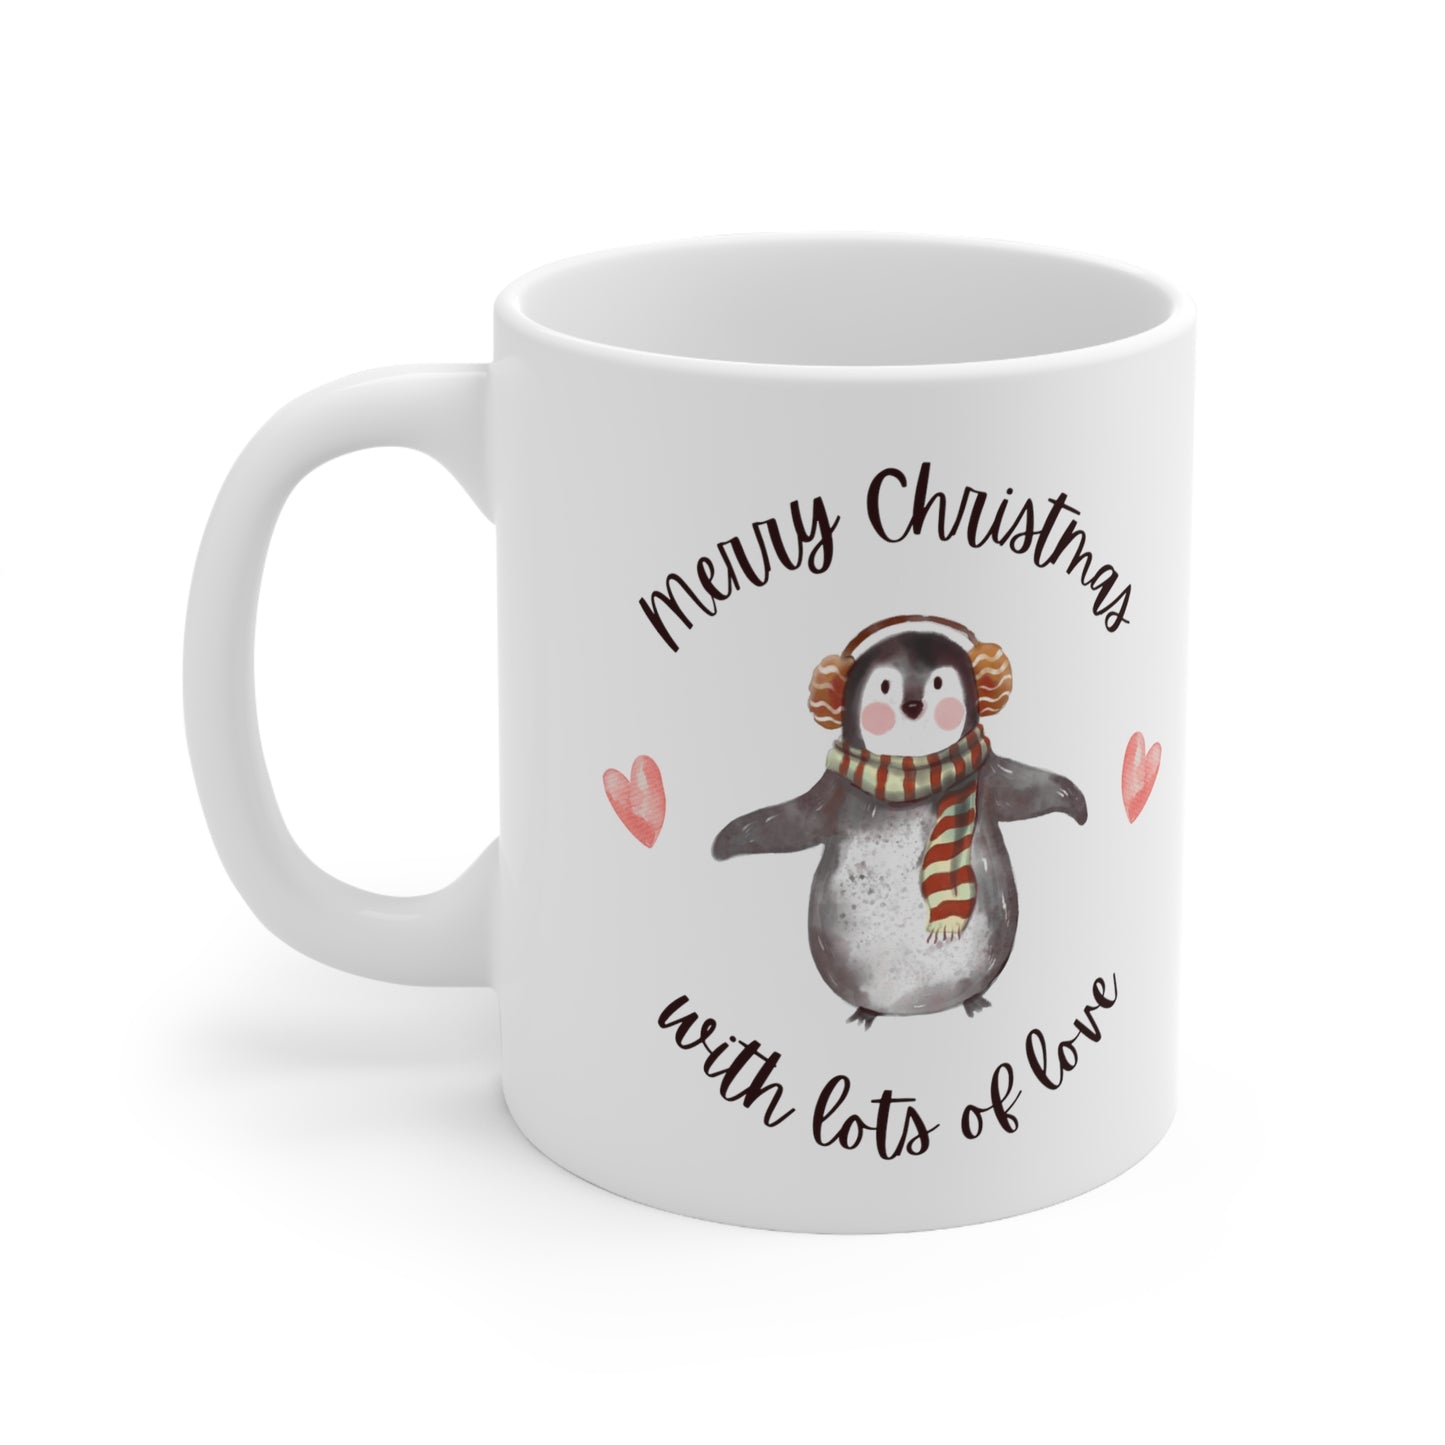 Merry Chistmas with Lots of Love Printed Ceramic Mug, 11 oz